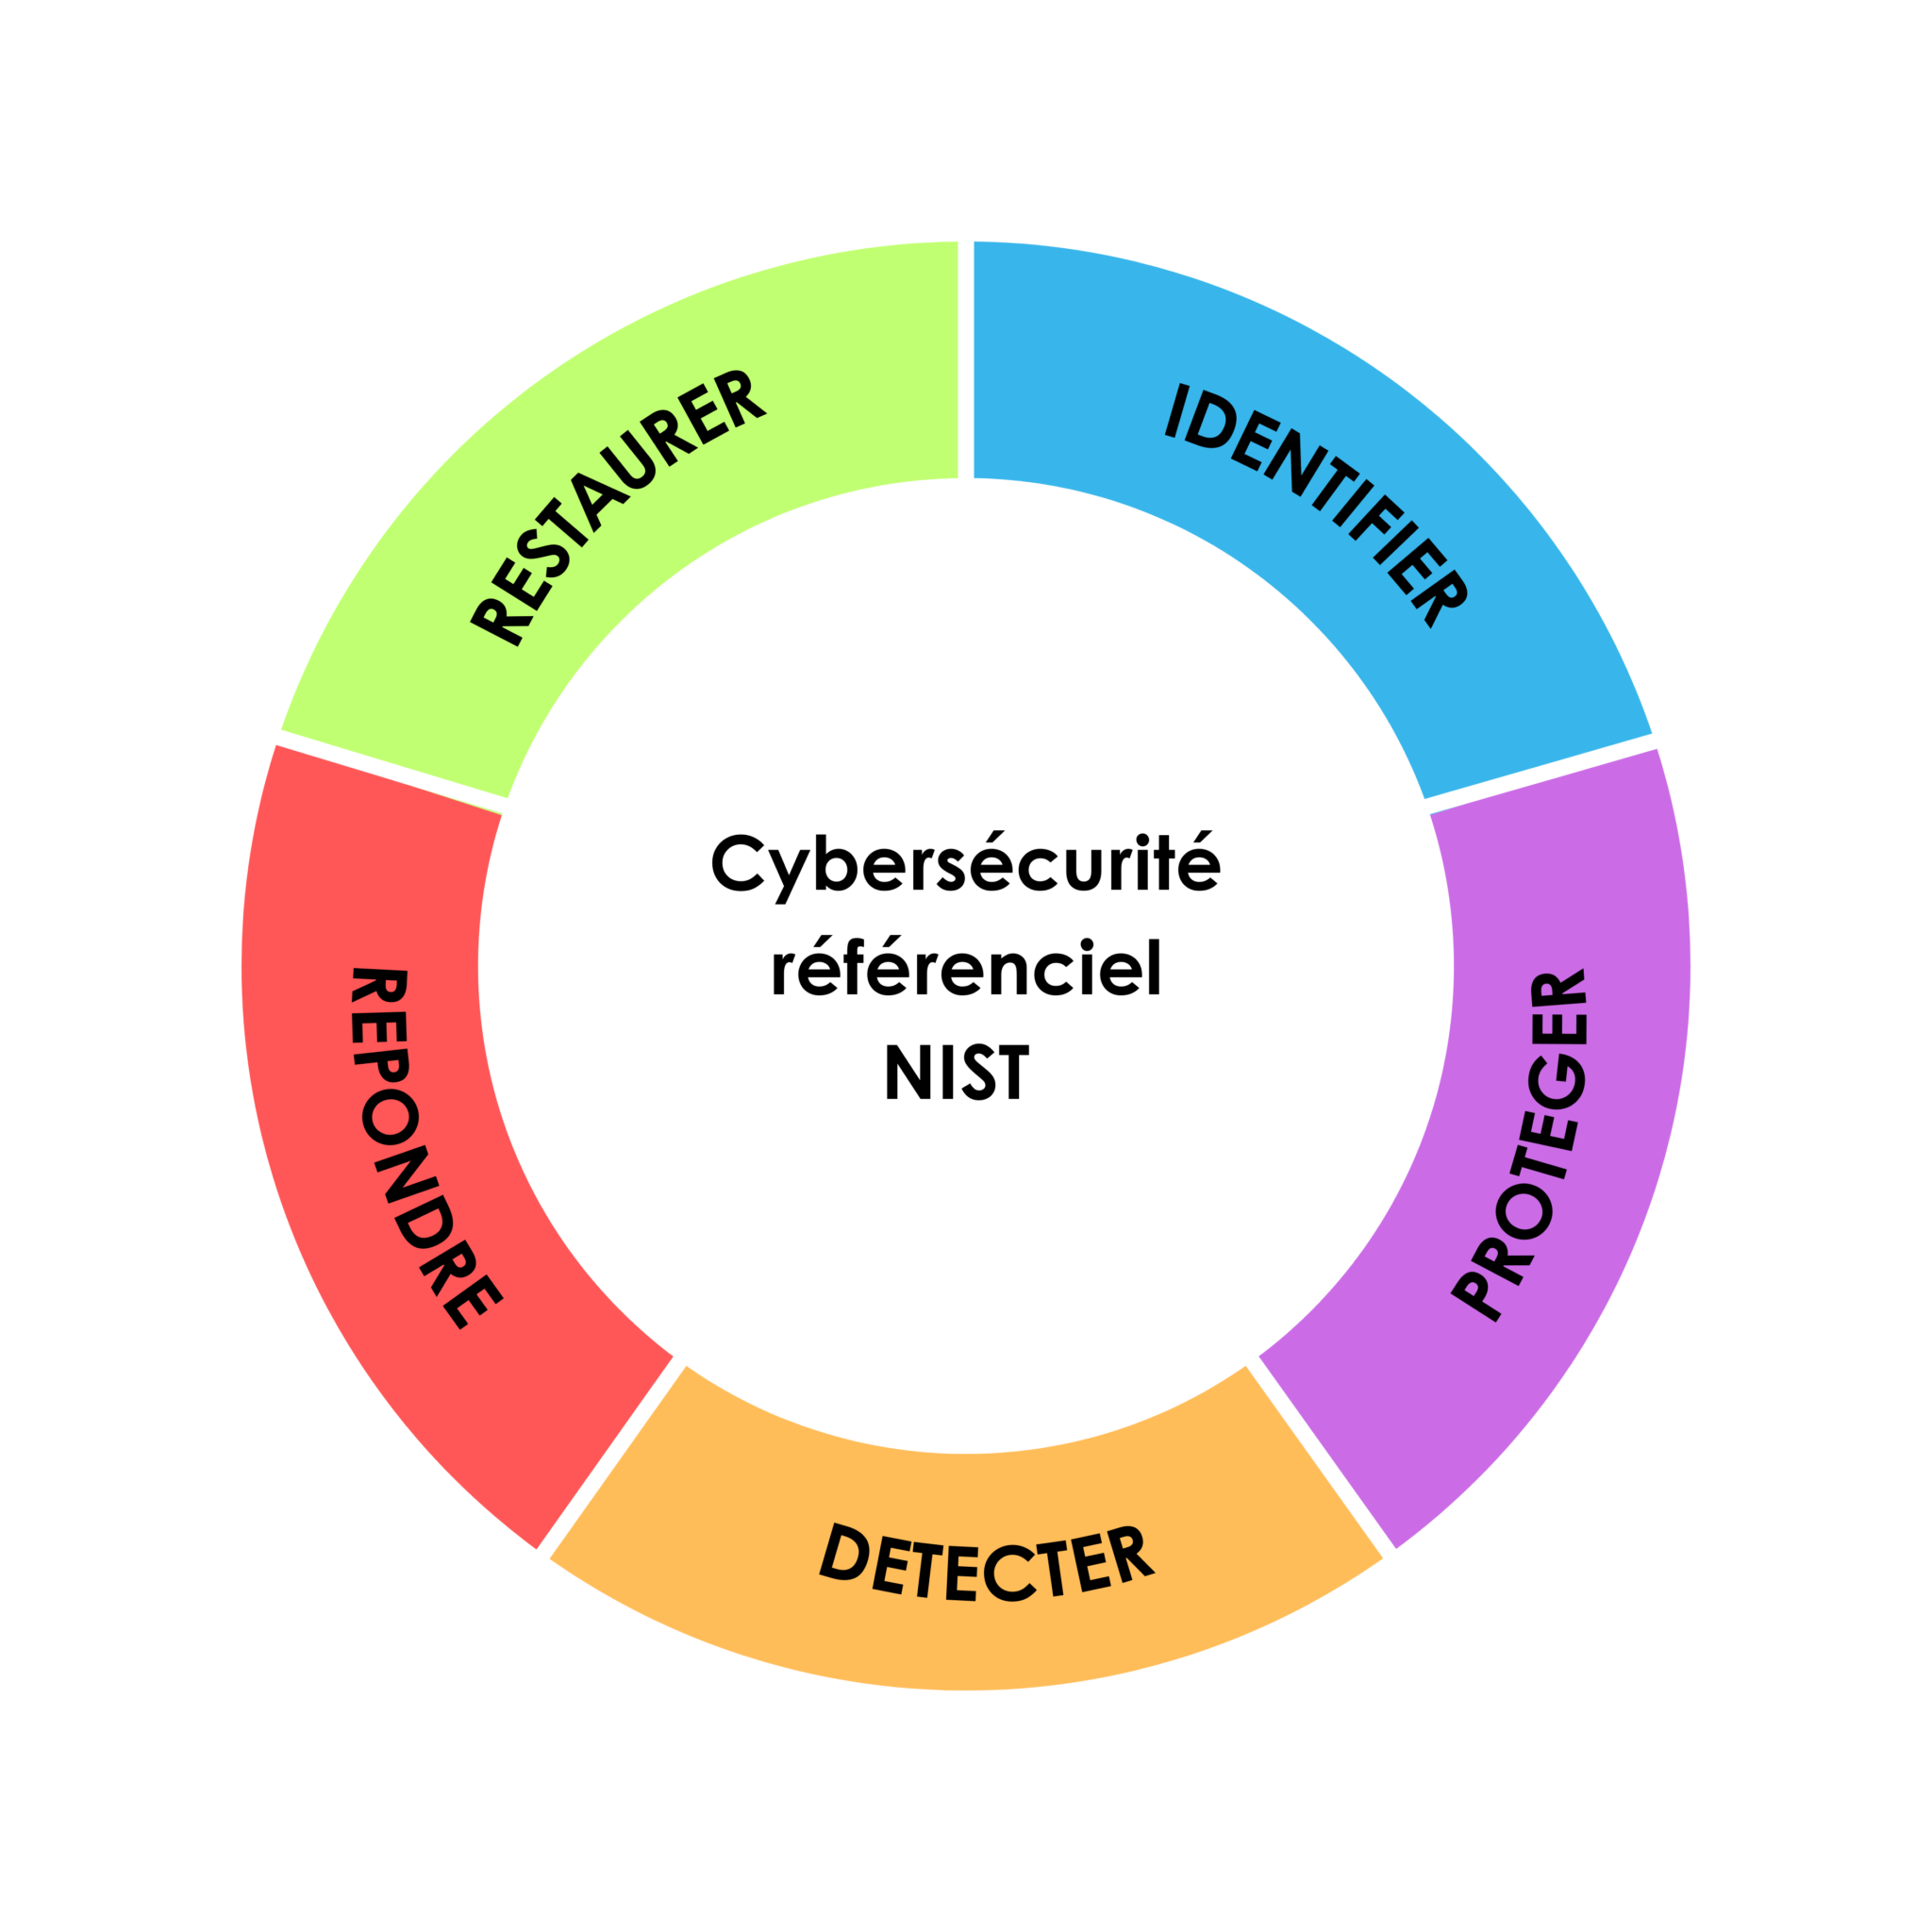 NIST Cybersecurity framework